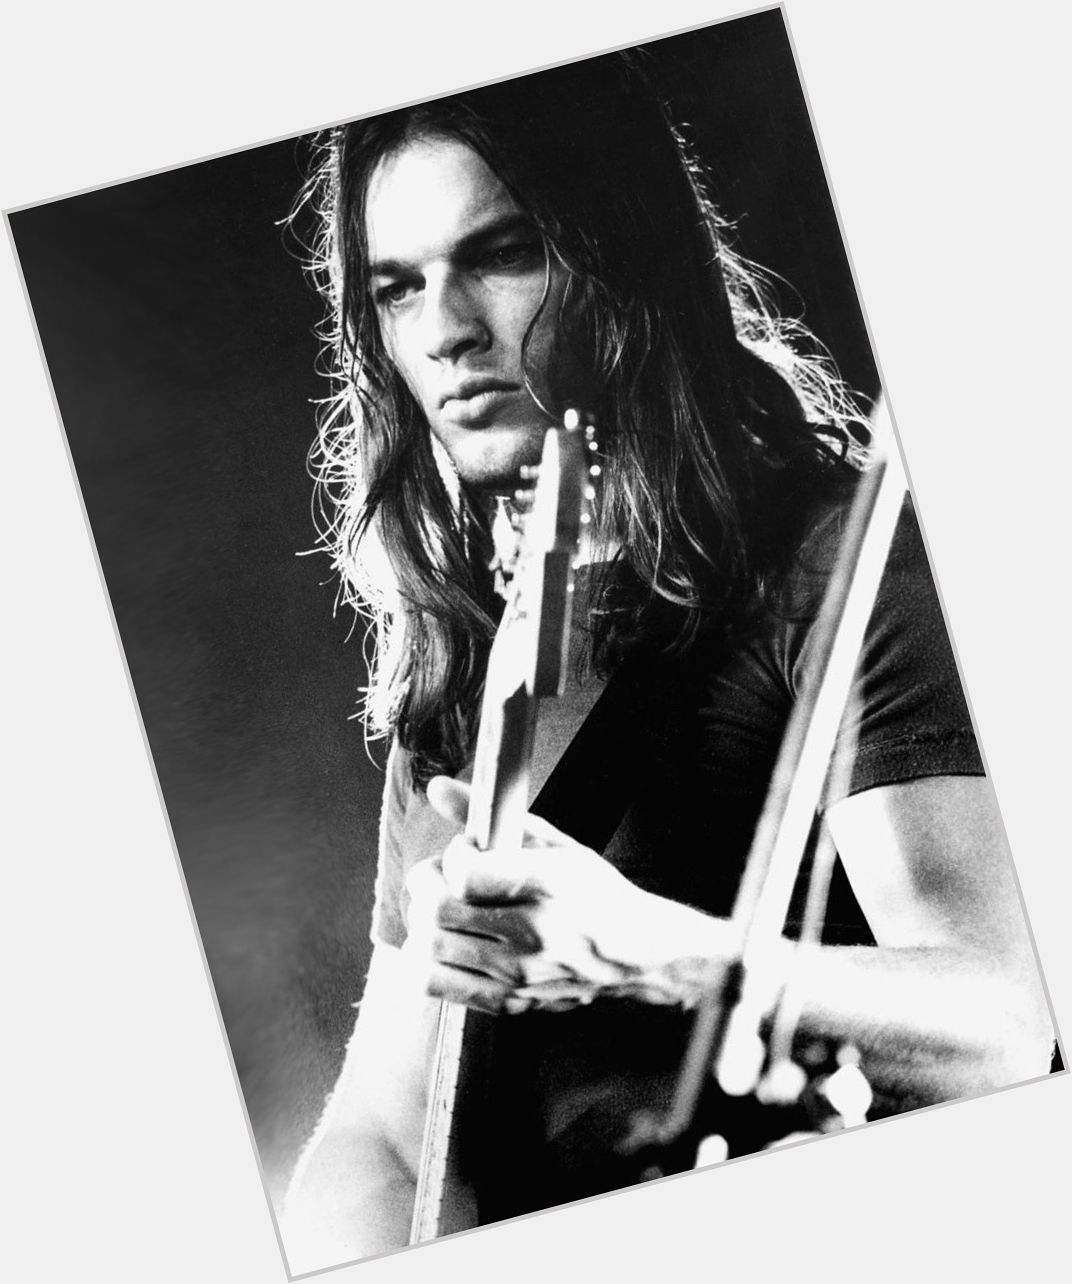 Happy birthday to legendary guitarist David Gilmour! 